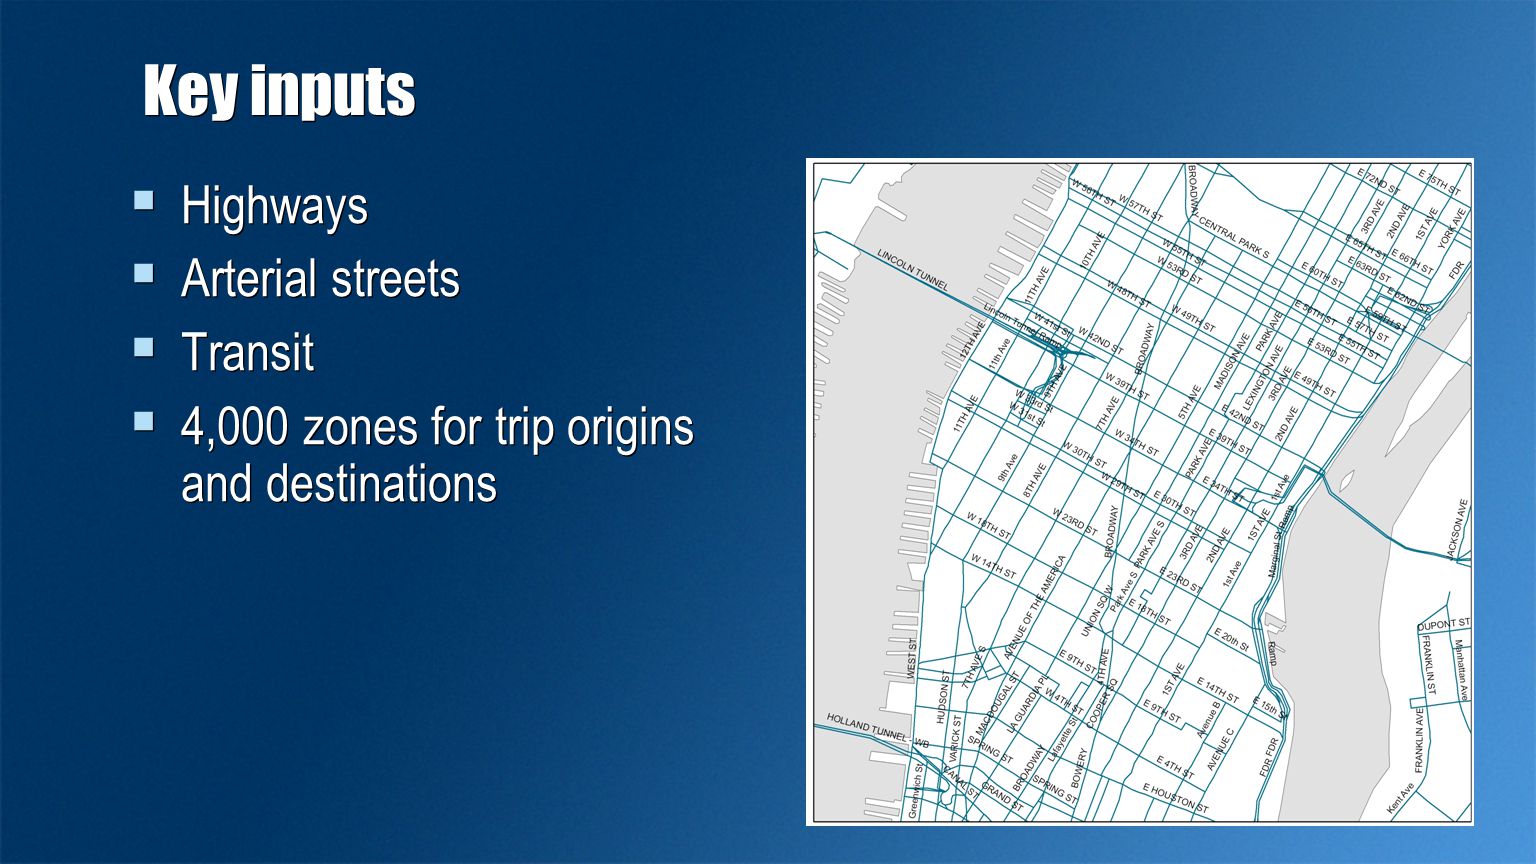 Key inputs  Highways  Arterial streets  Transit  4,000 zones for trip origins and destinations  Highways  Arterial streets  Transit  4,000 zones for trip origins and destinations